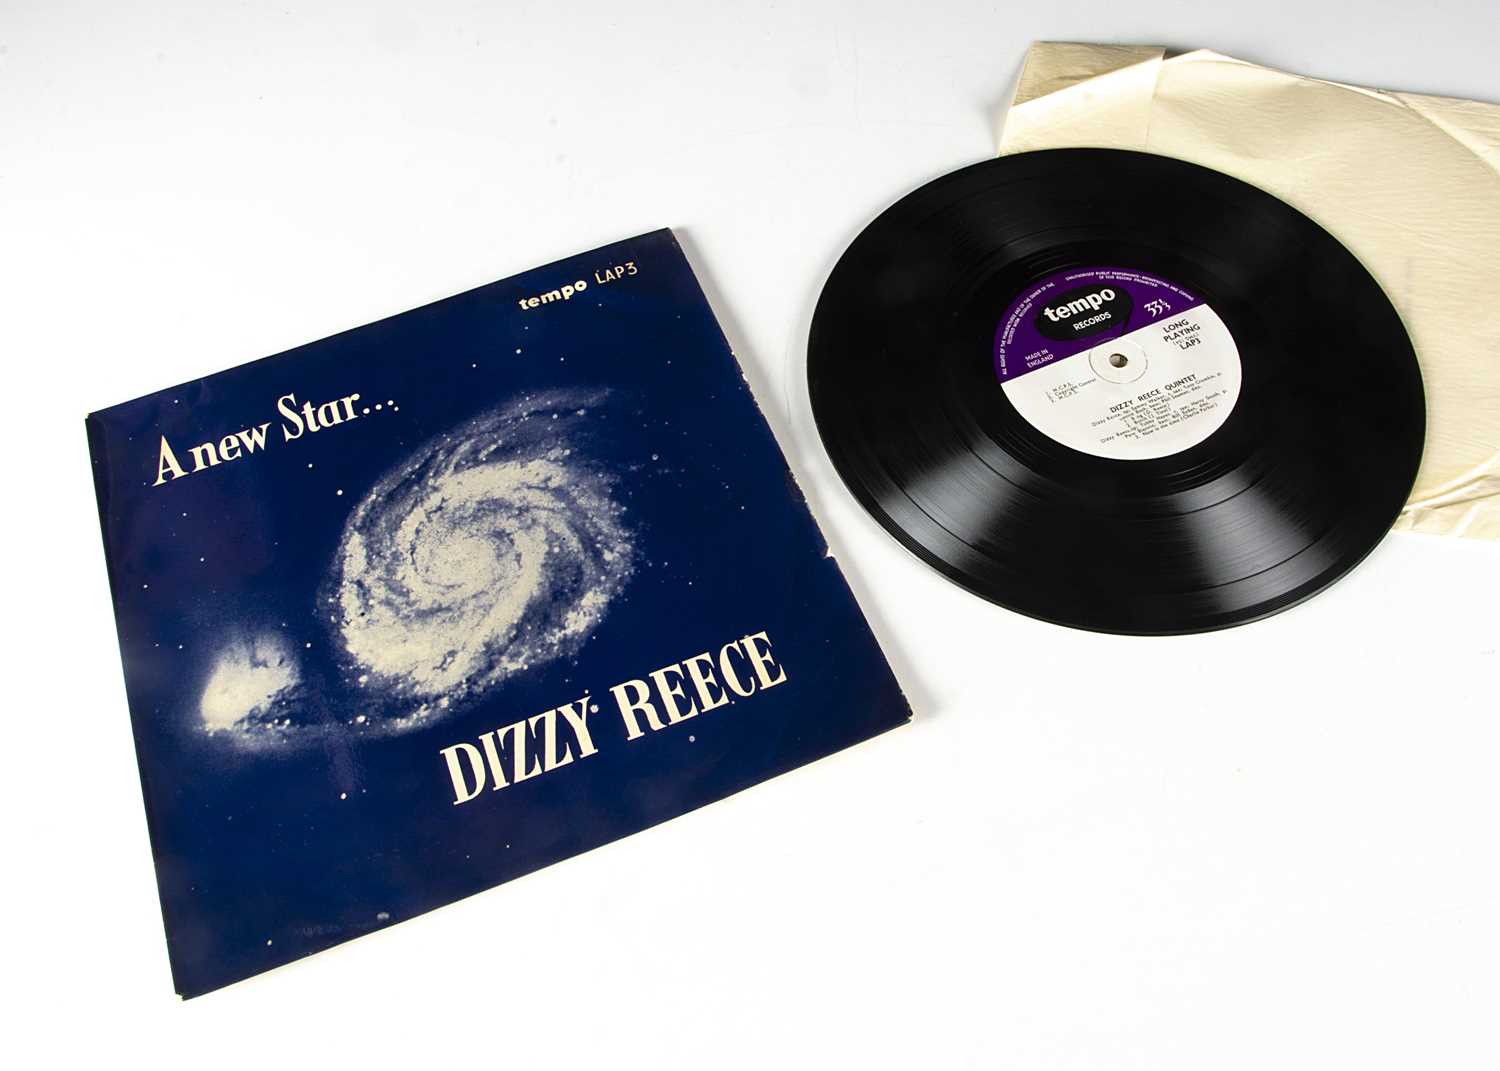 Lot 4 - Dizzy Reece LP